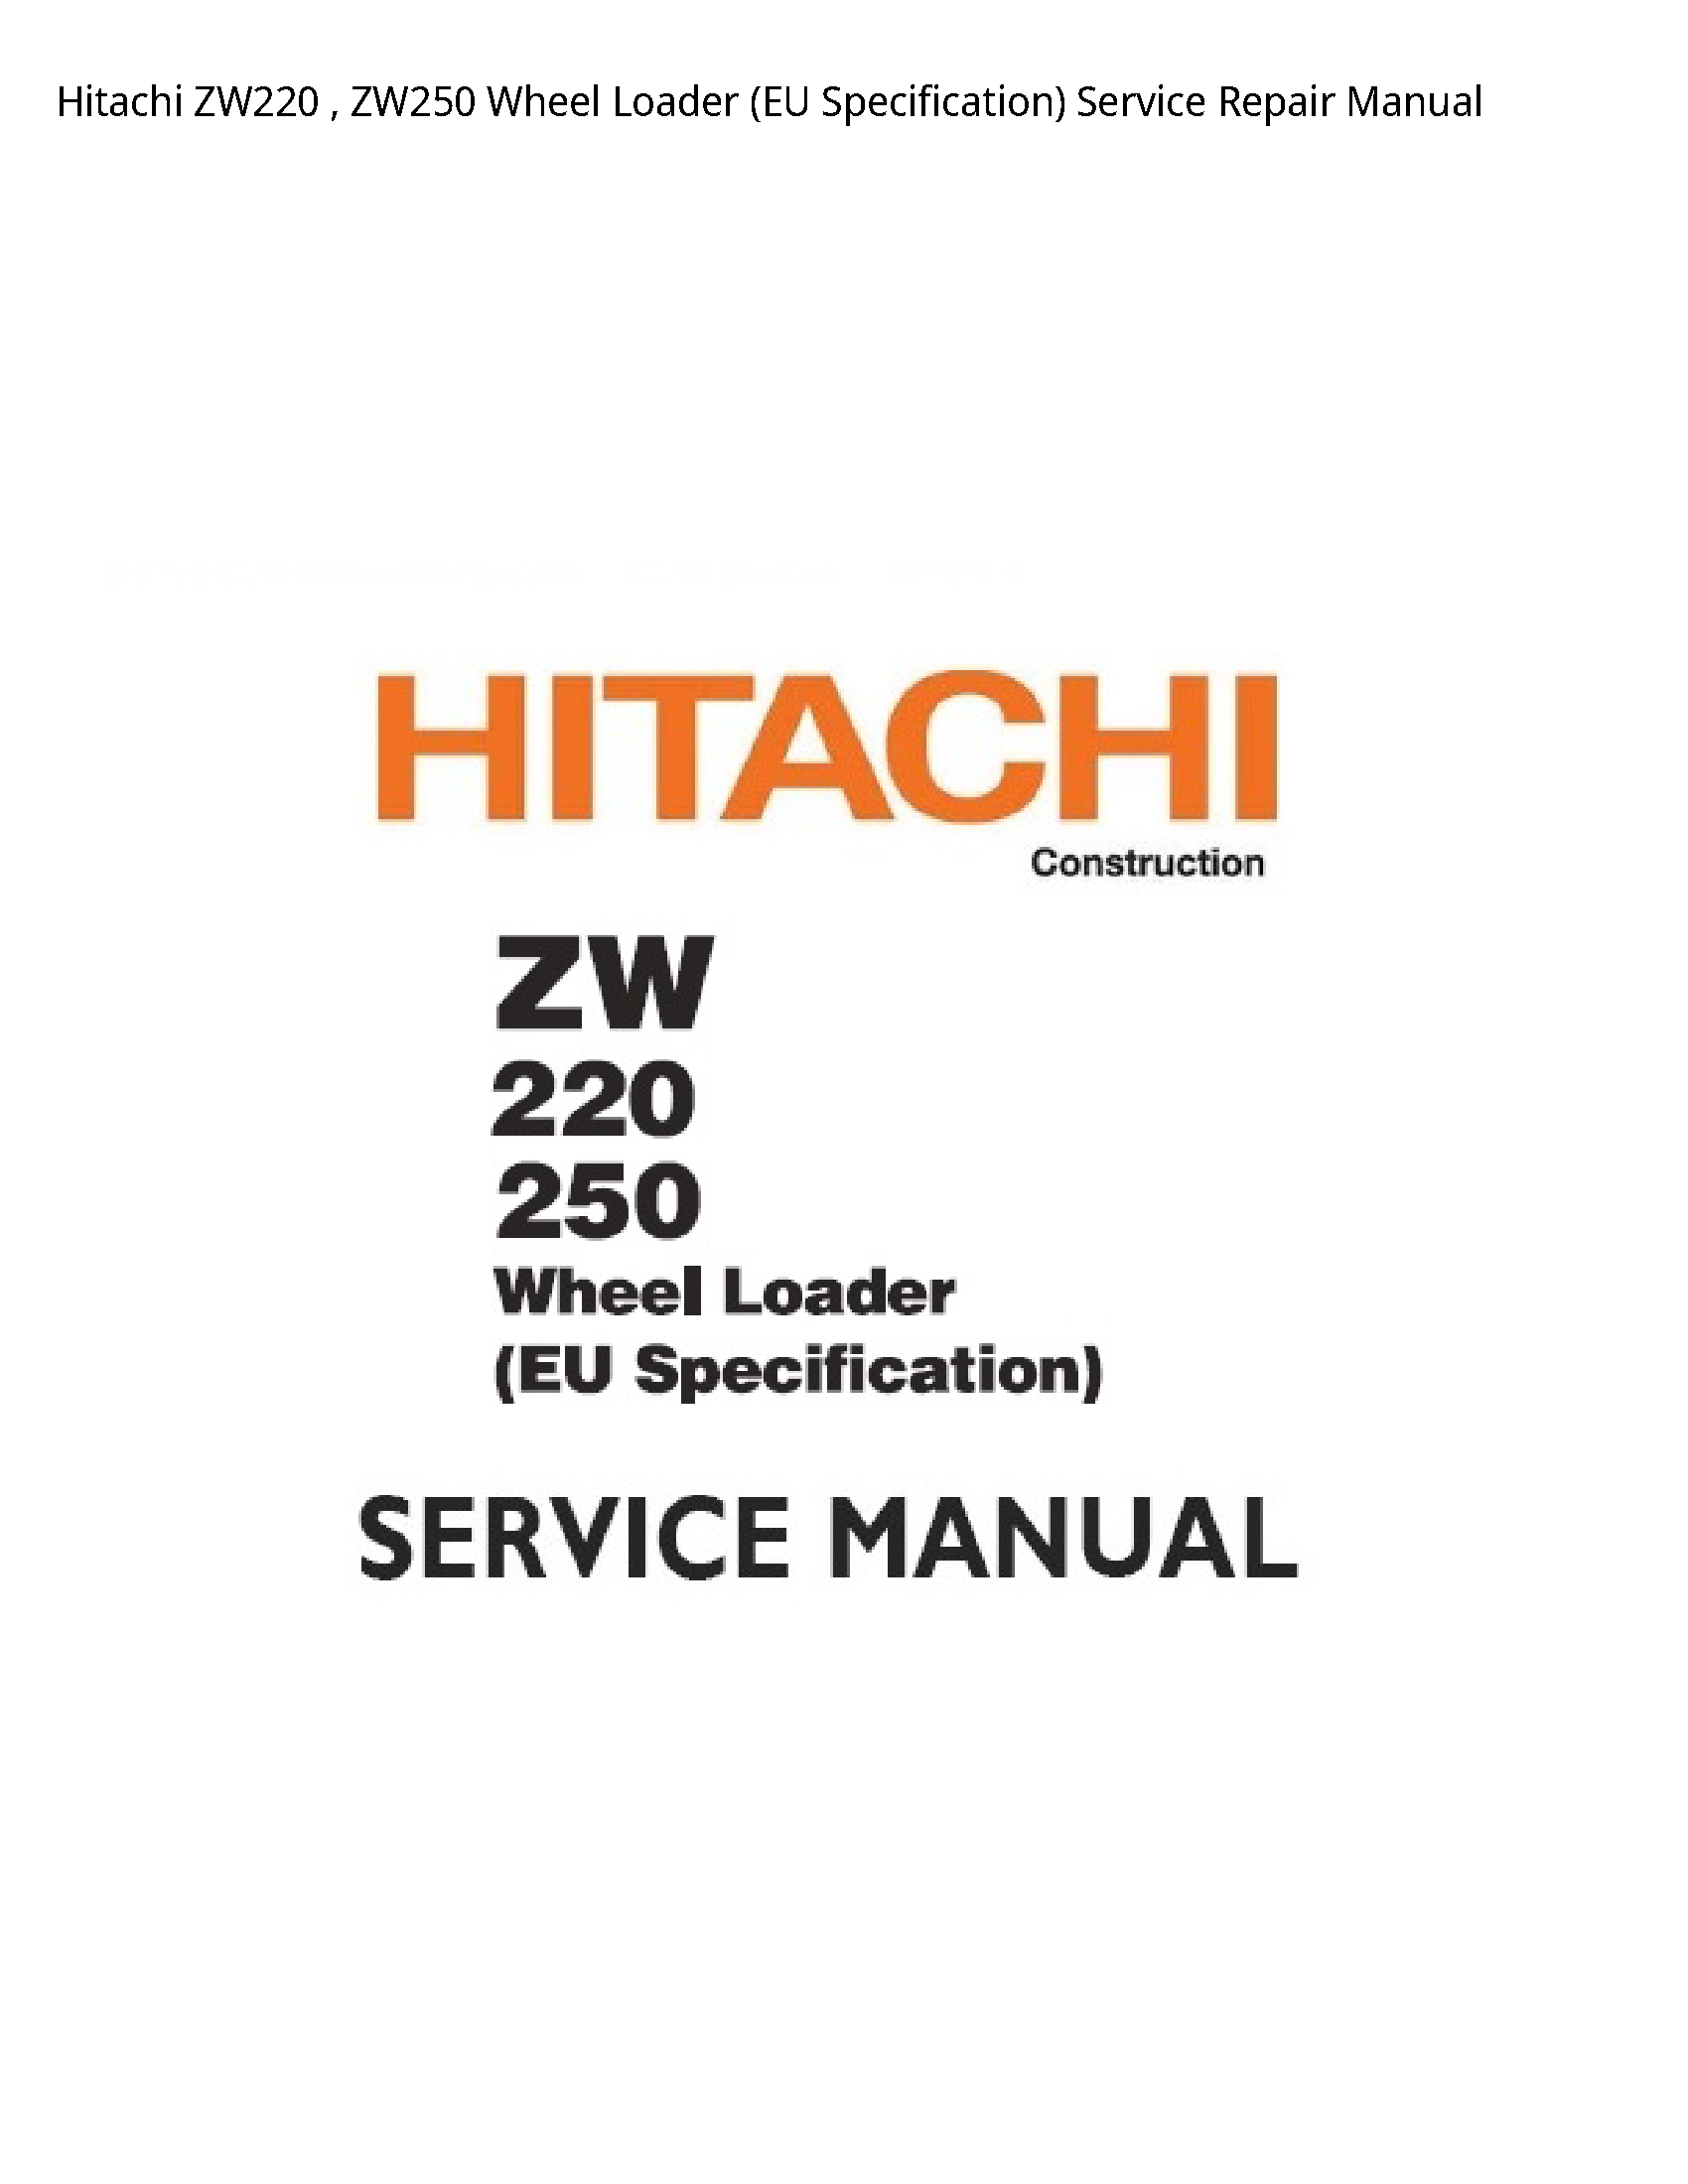 Hitachi ZW220 Wheel Loader (EU Specification) manual